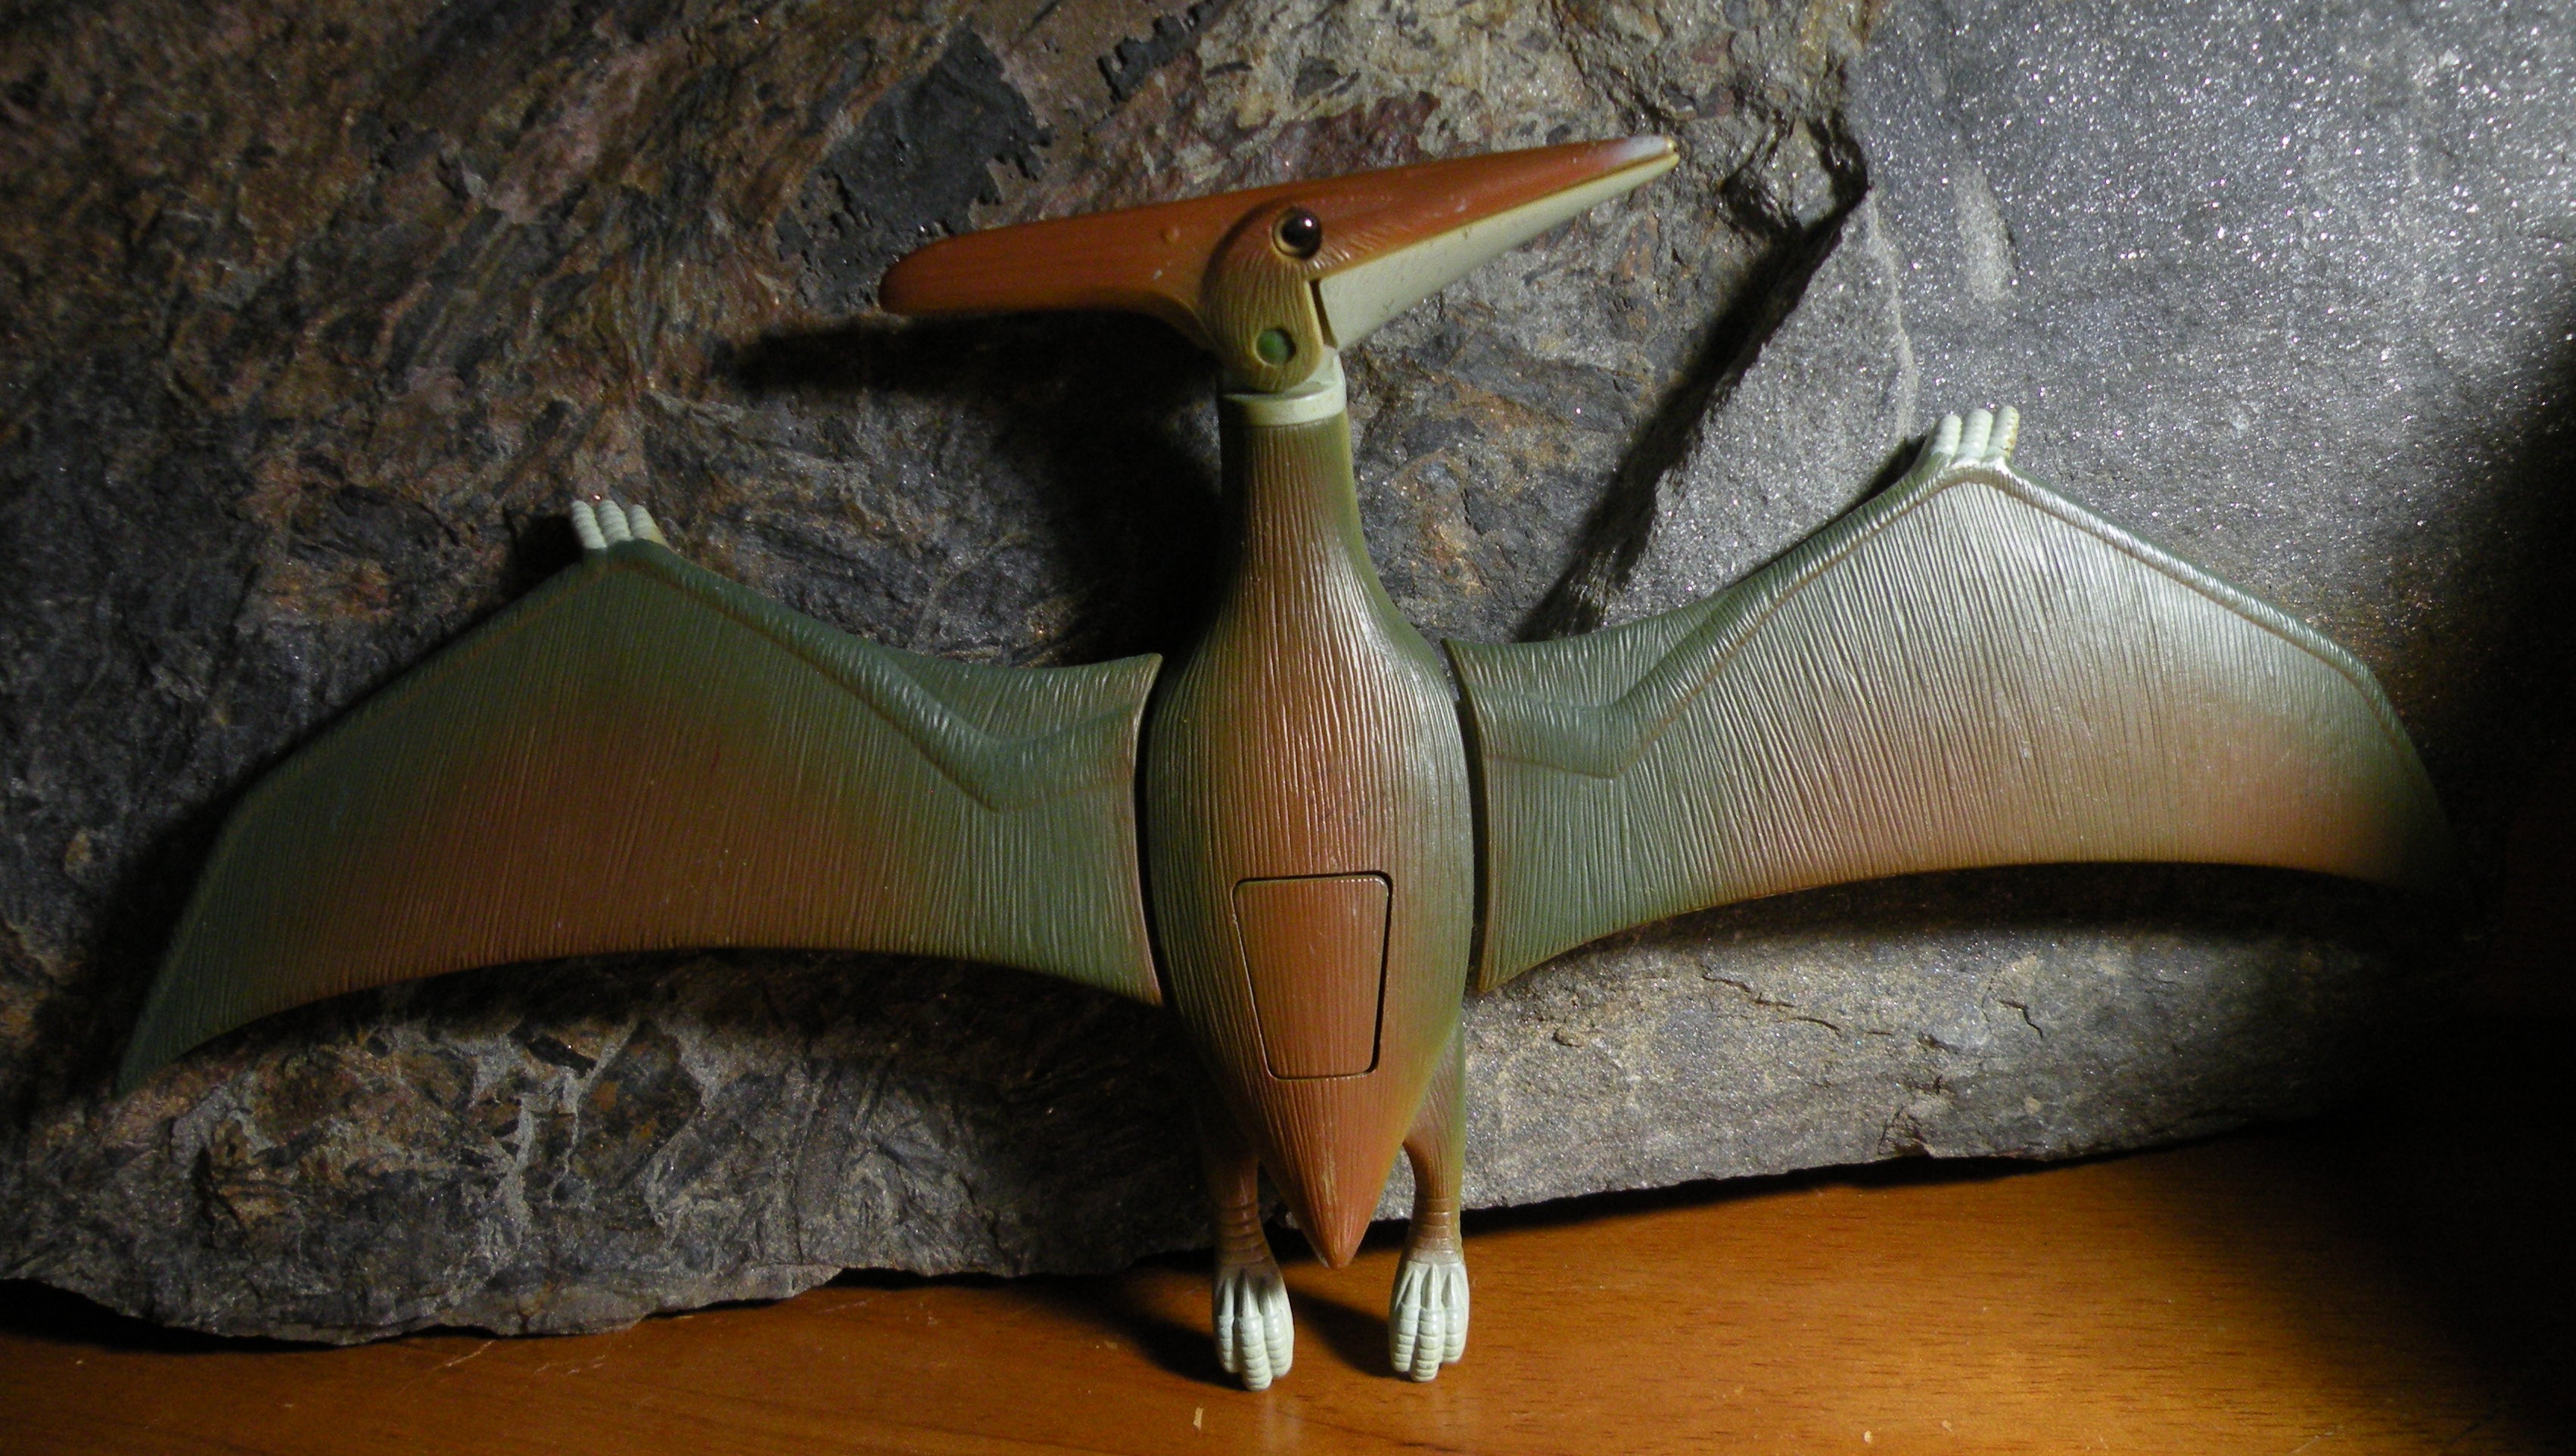 dino riders pterodactyl